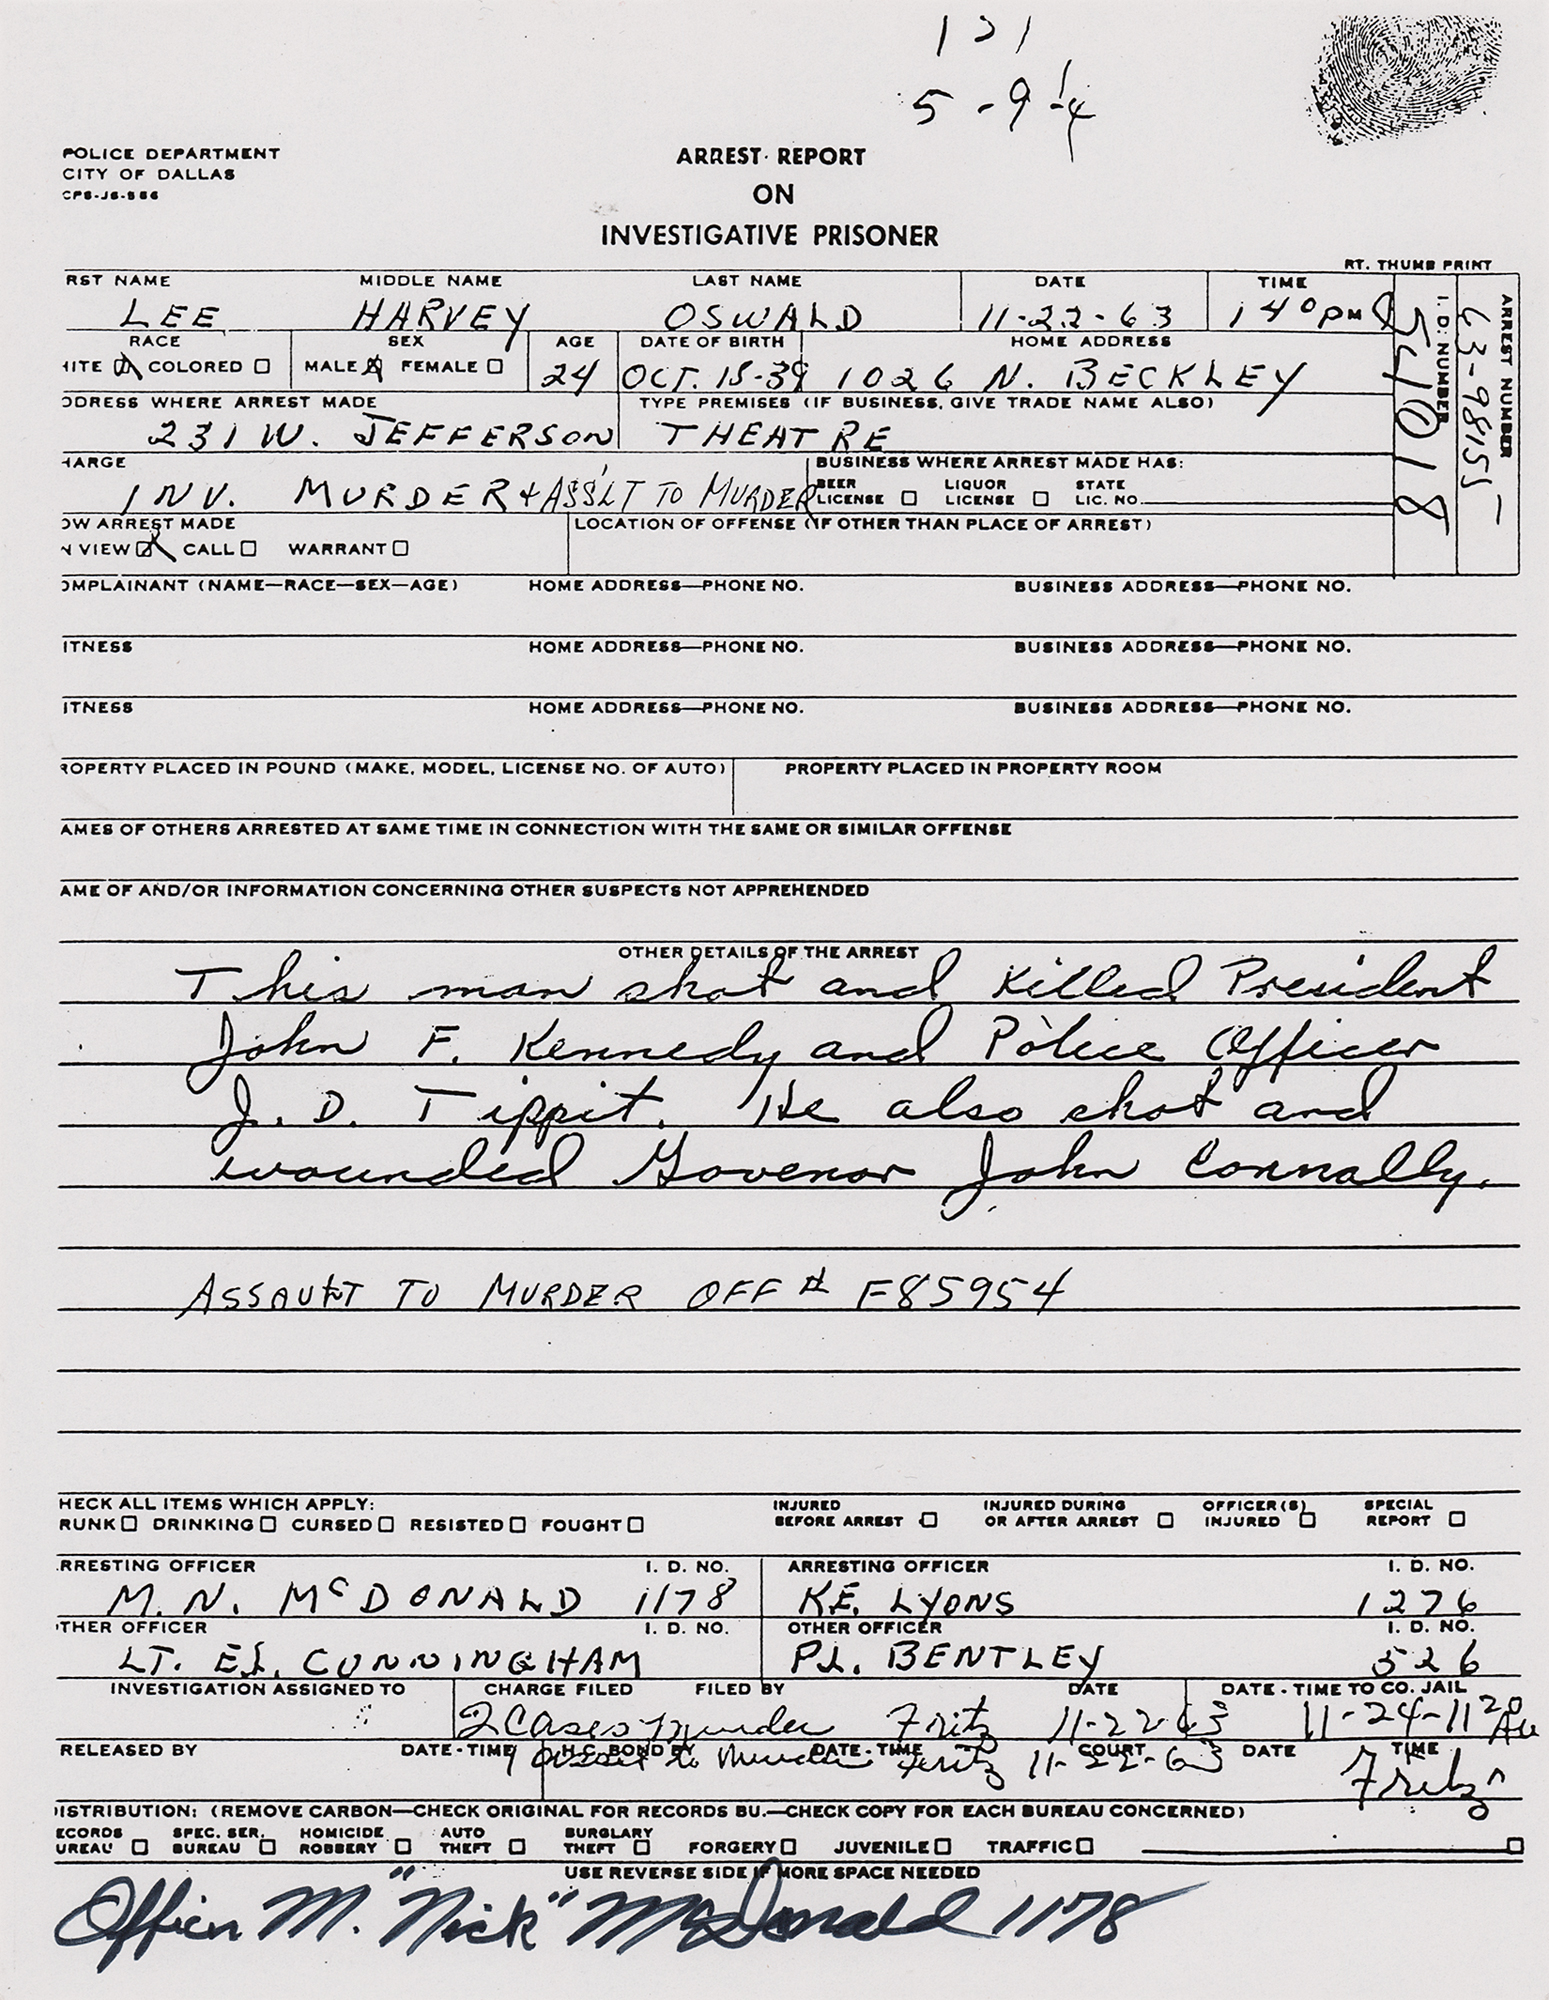 Lot #223 Kennedy Assassination: Maurice 'Nick' McDonald Signed Arrest Report